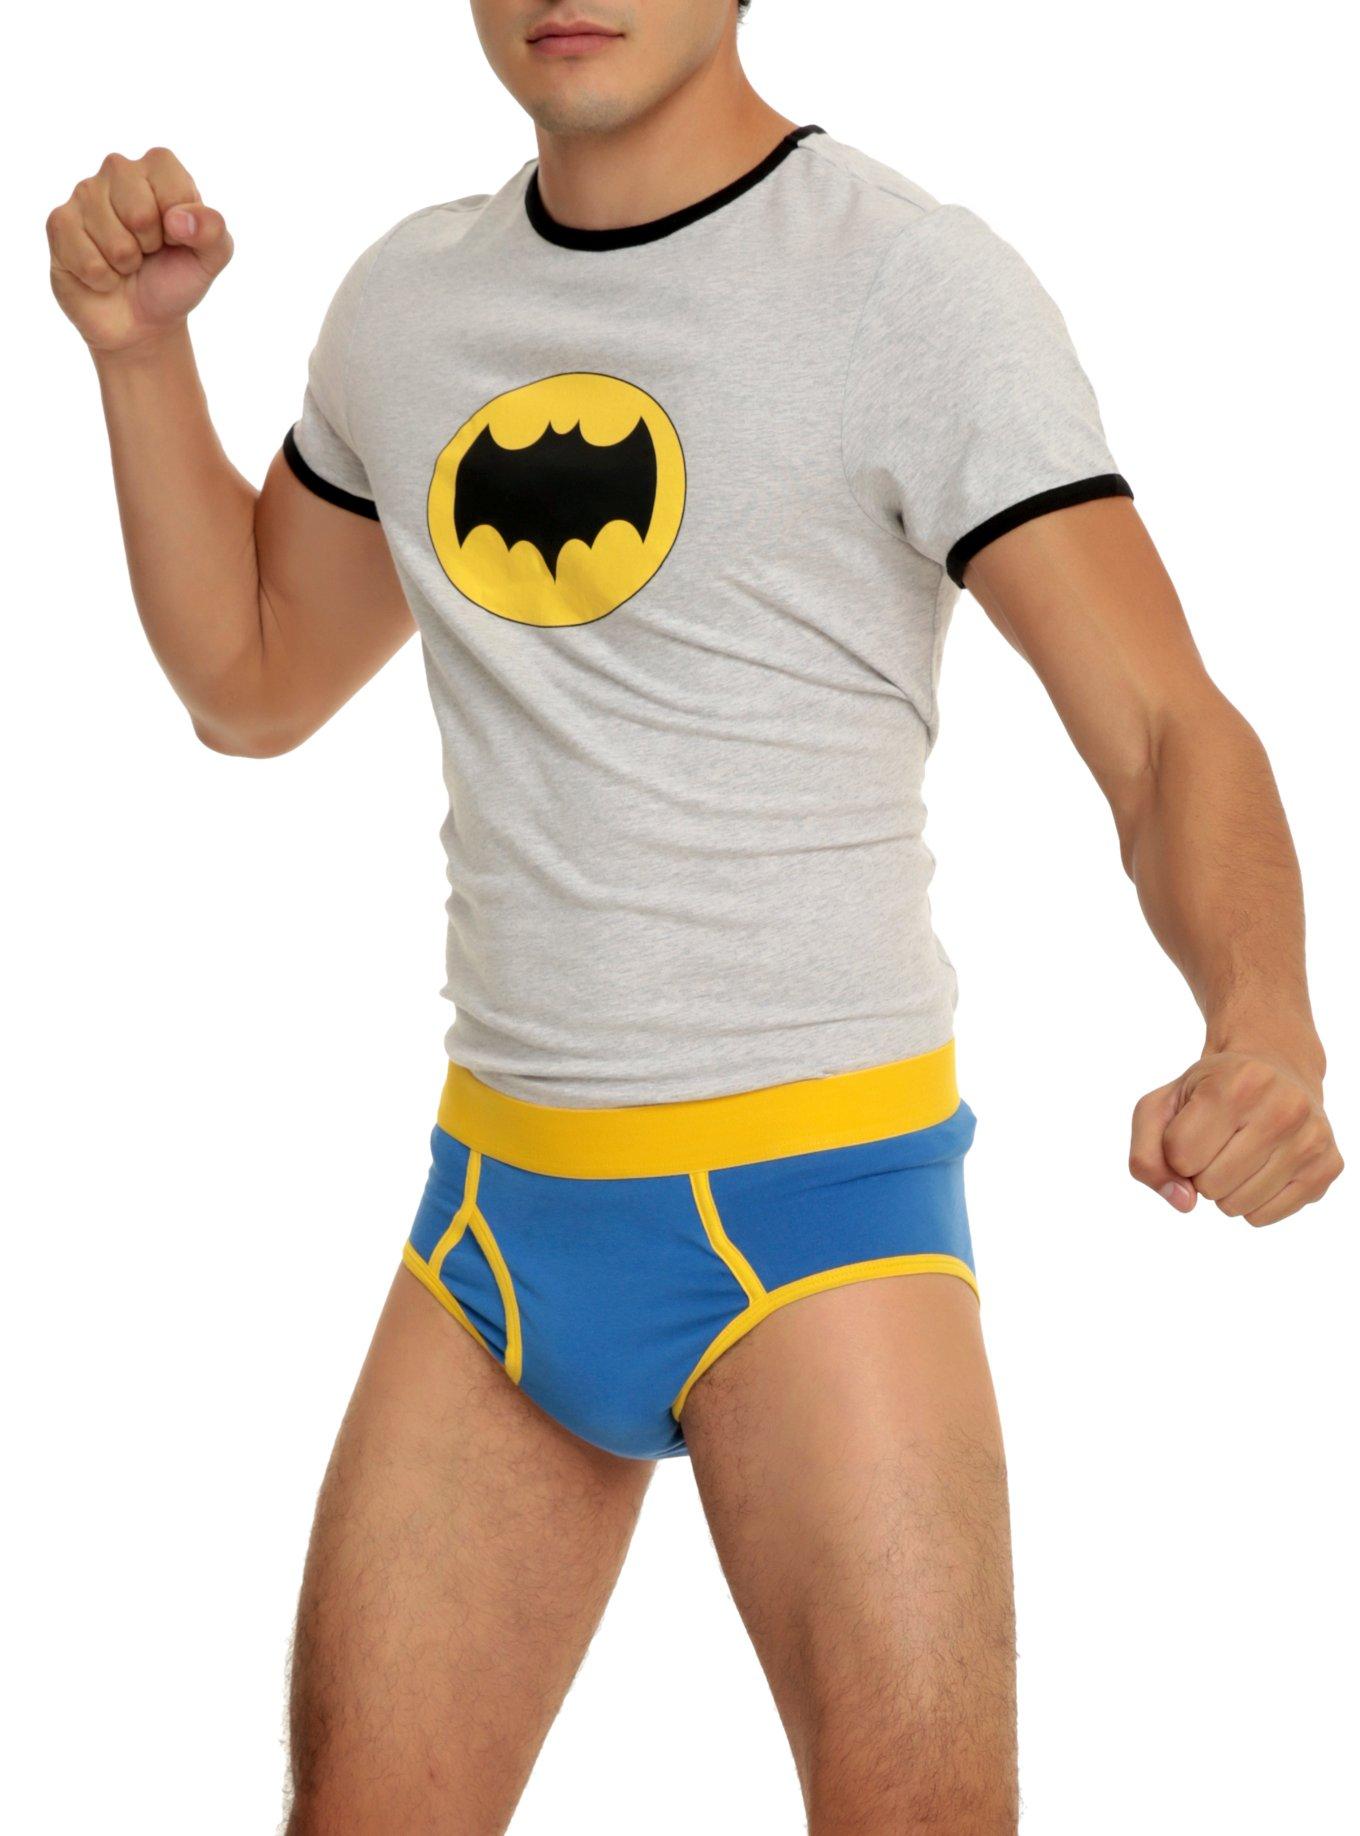 ORIGINAL BATMAN UNDEROOS Mens,Guys, Unisex Underwear Set Top+Boxer Brief  BLACK $20.00 - PicClick